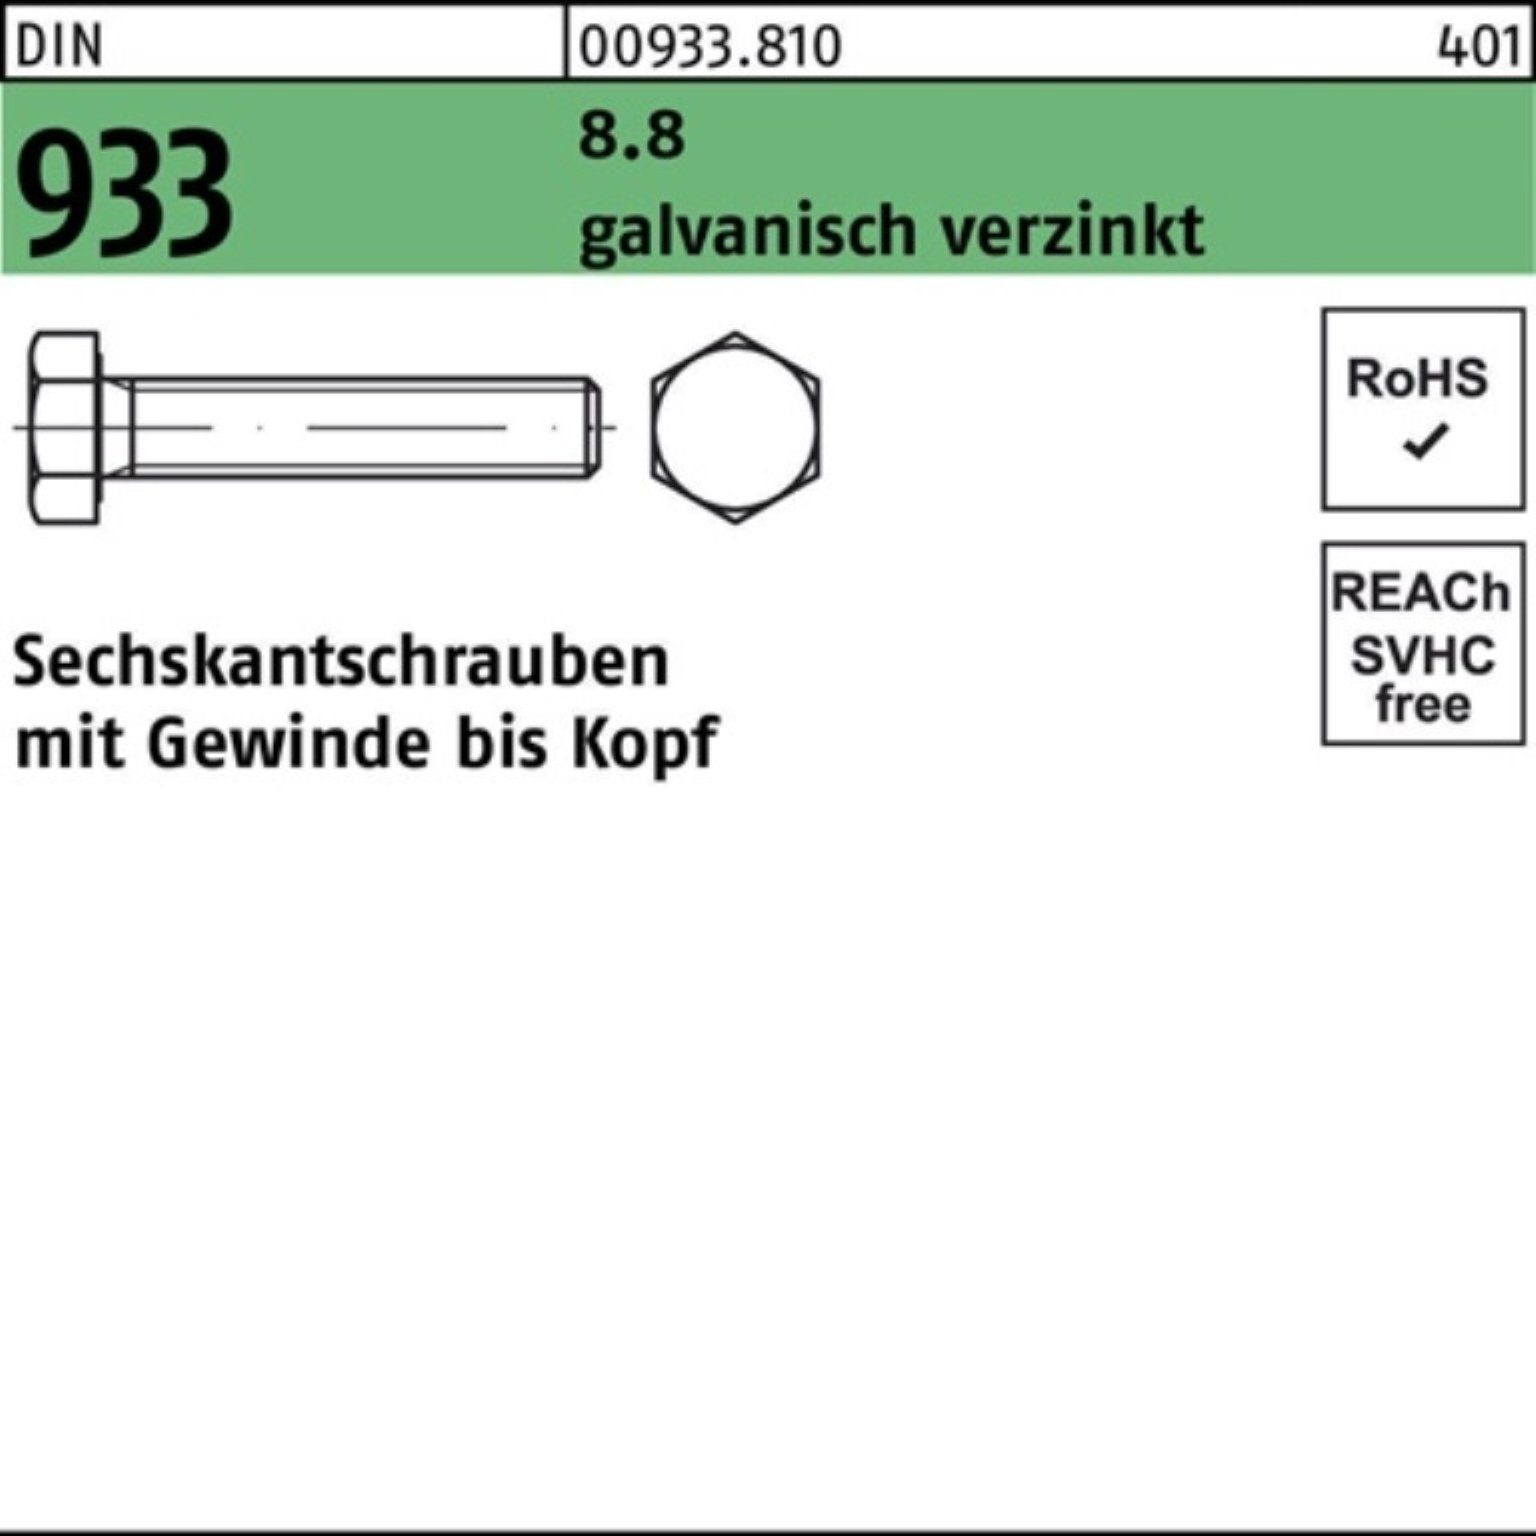 Reyher 500er Sechskantschraube DIN Sechskantschraube Stüc 5 8.8 VG Pack M3x 933 500 galv.verz.